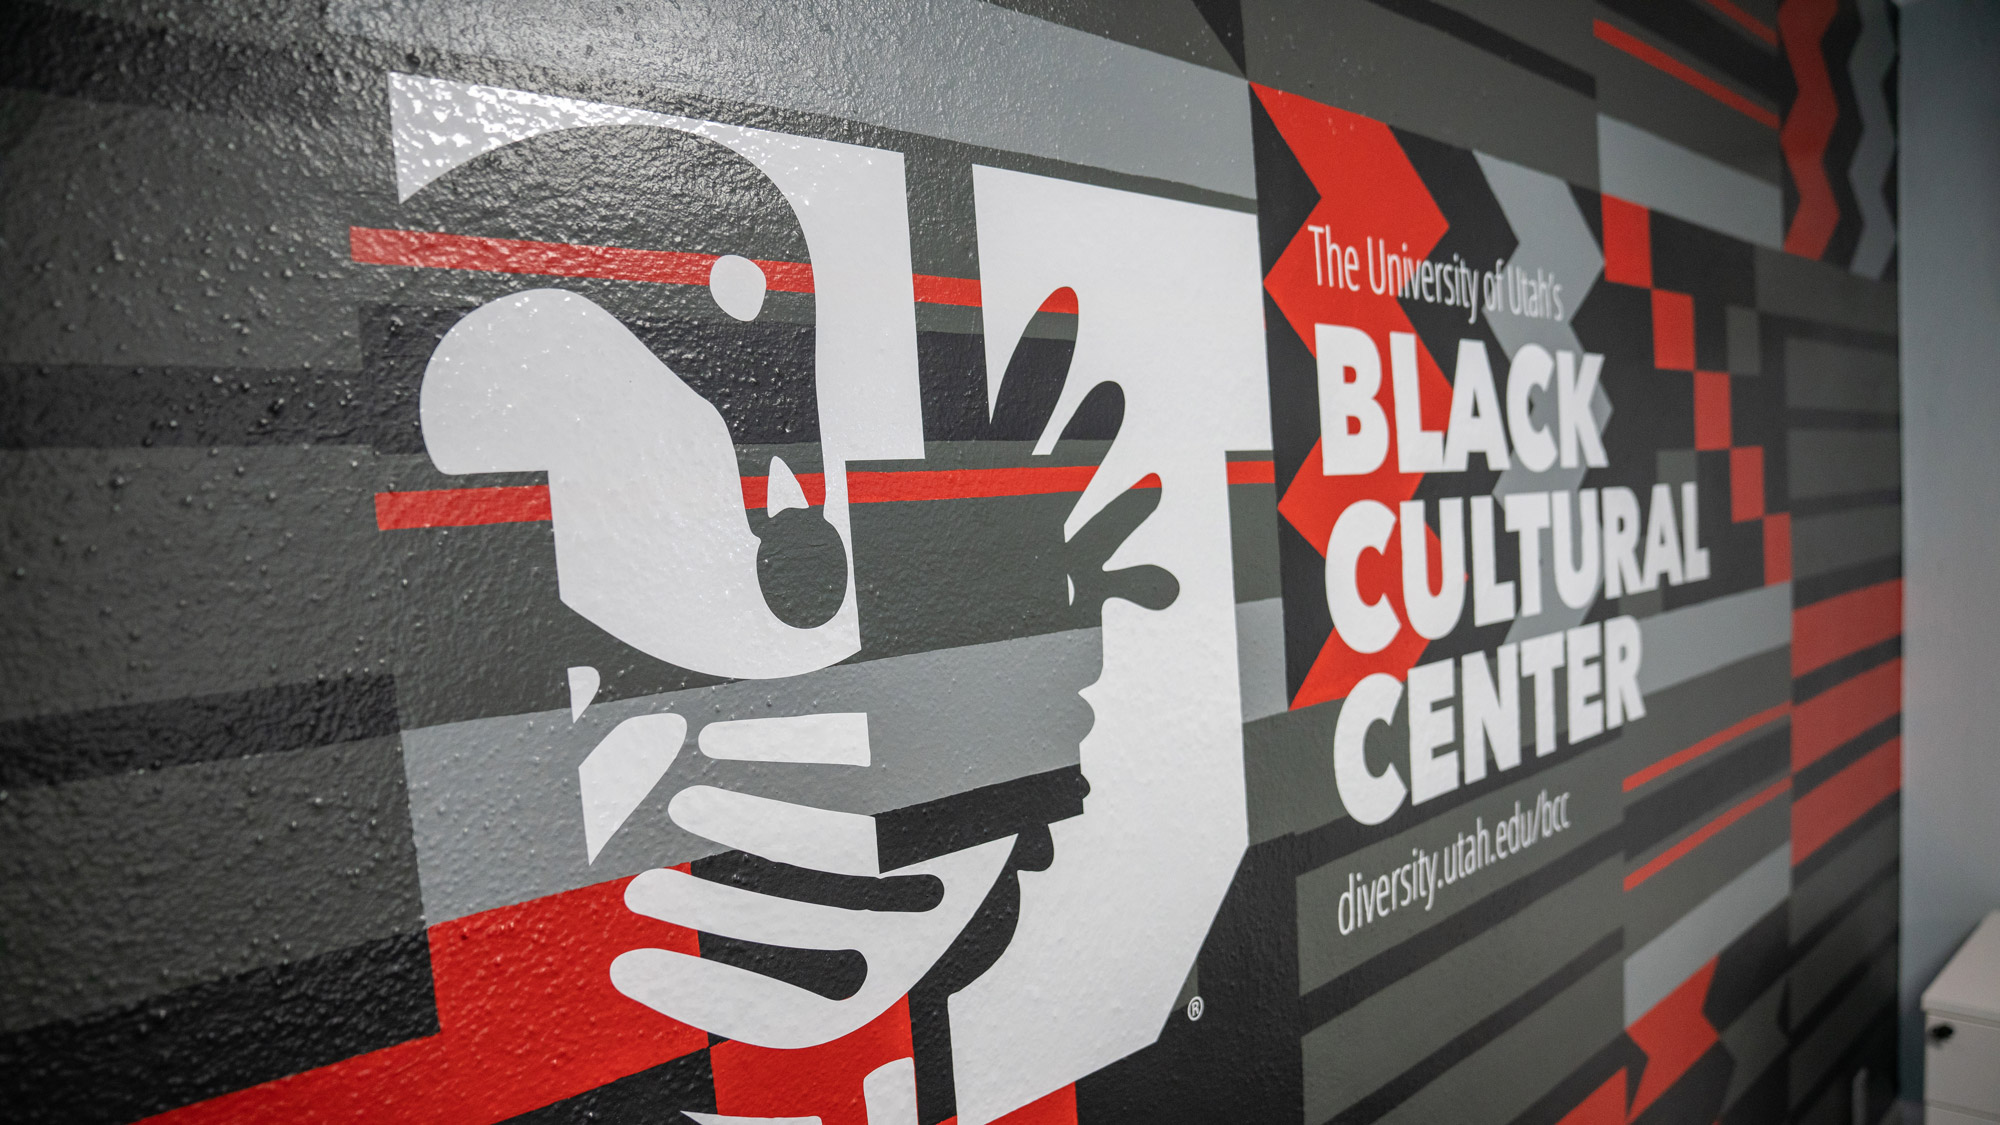 George Floyd Memorial Fund in the Black Cultural Center at the University of Utah